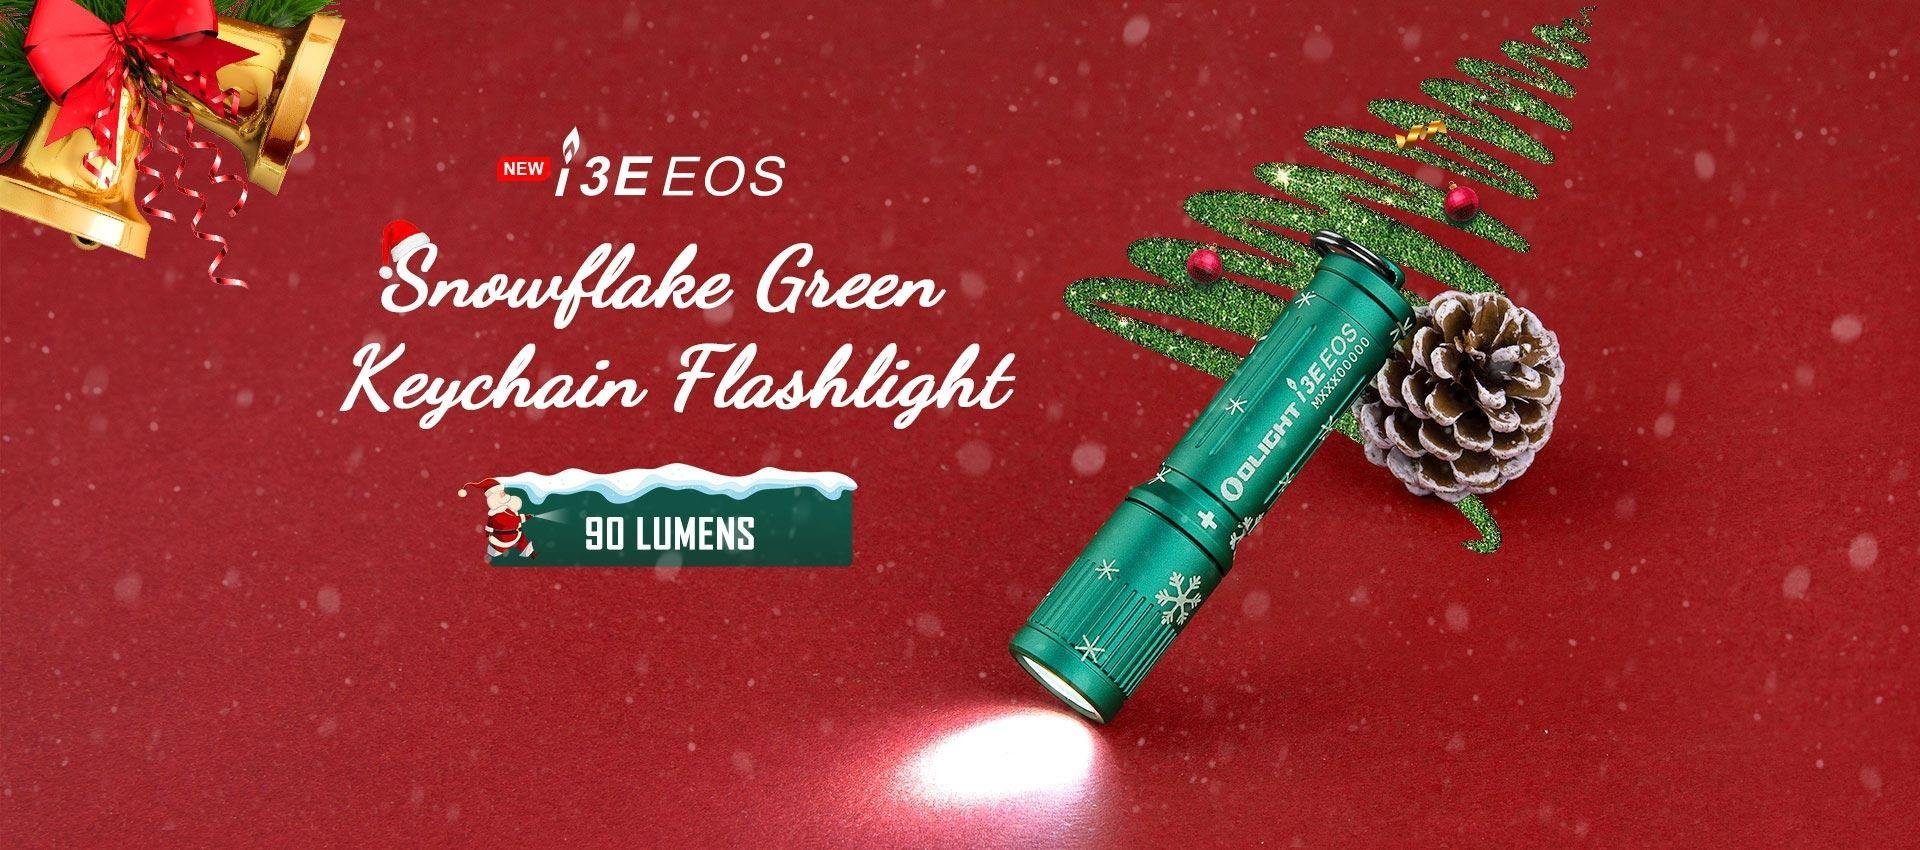 OLIGHT Taschenlampe 90 Schlüsselanhänger Taschenlampe Schneeflocke Grüne I3E Lumen EOS LED OLIGHT Mini